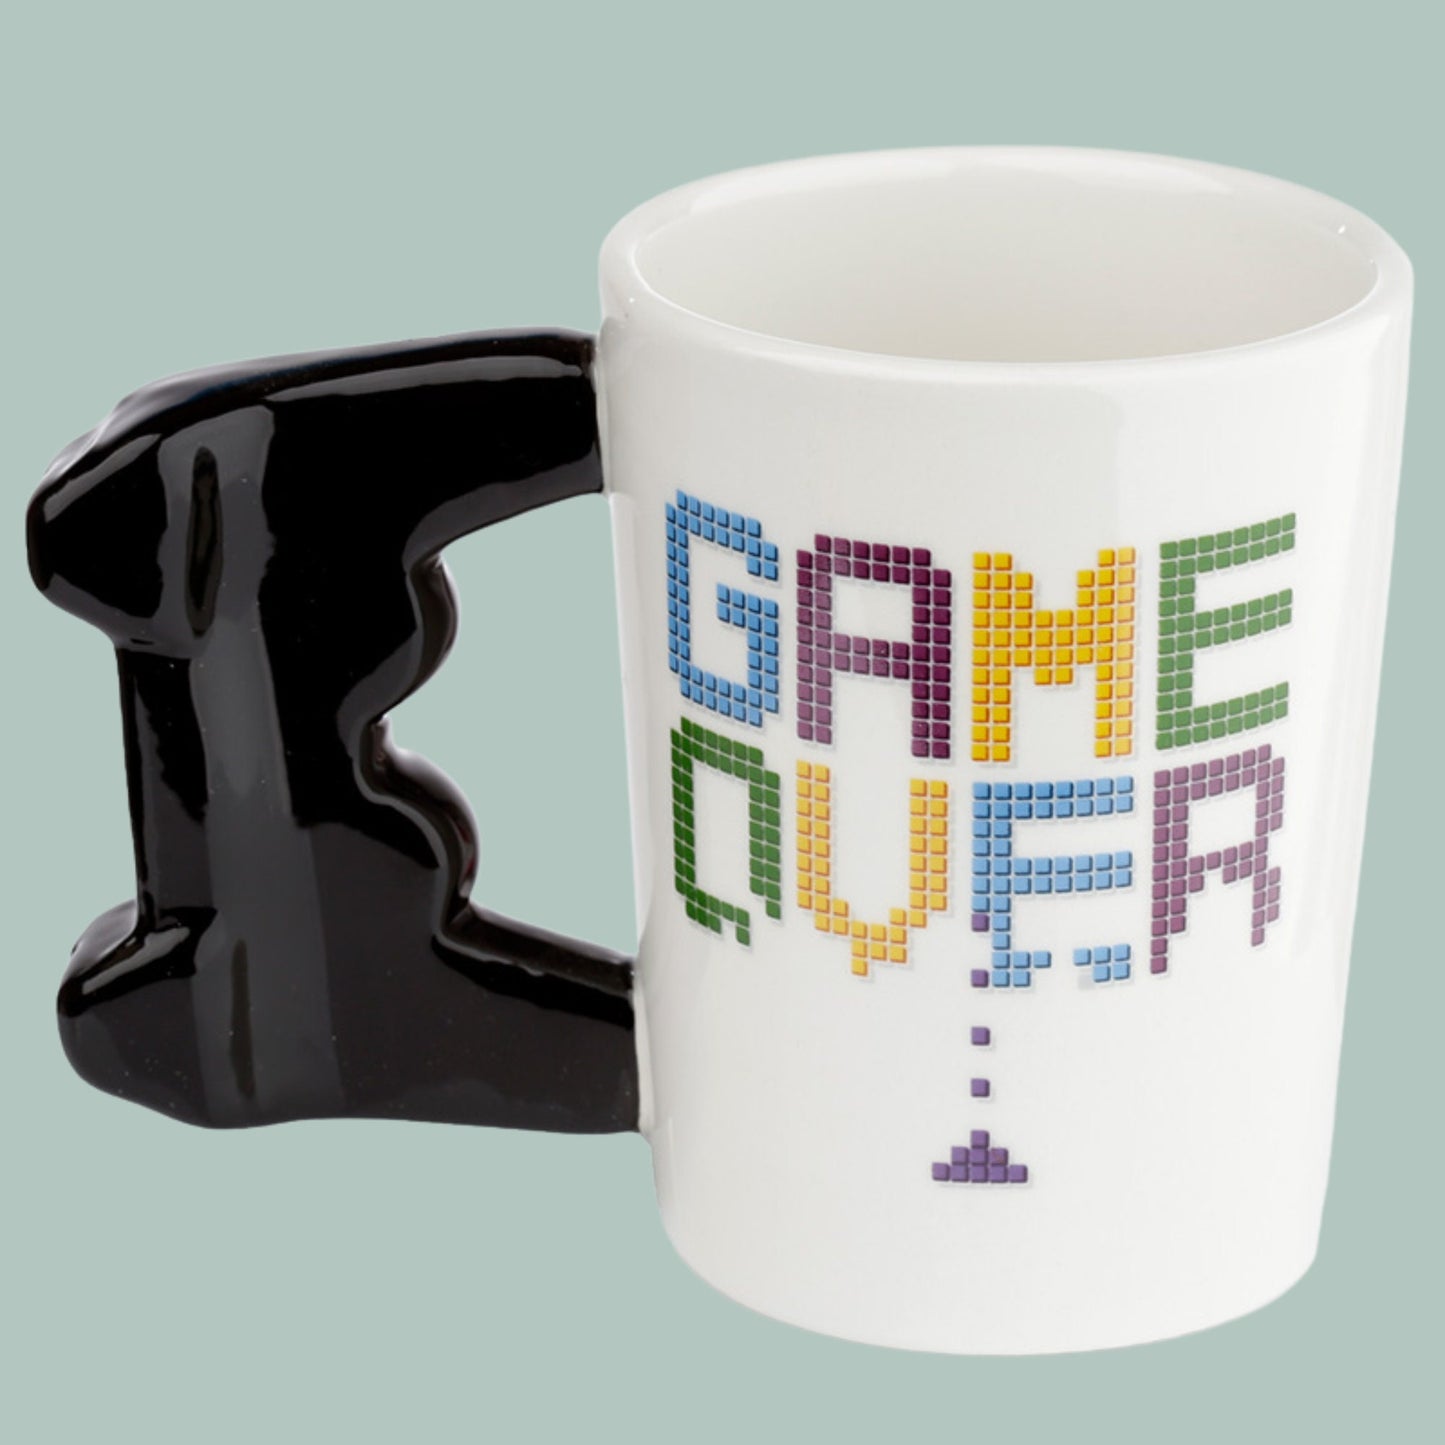 Game Over Gamer Mug with Joypad Shaped Handle